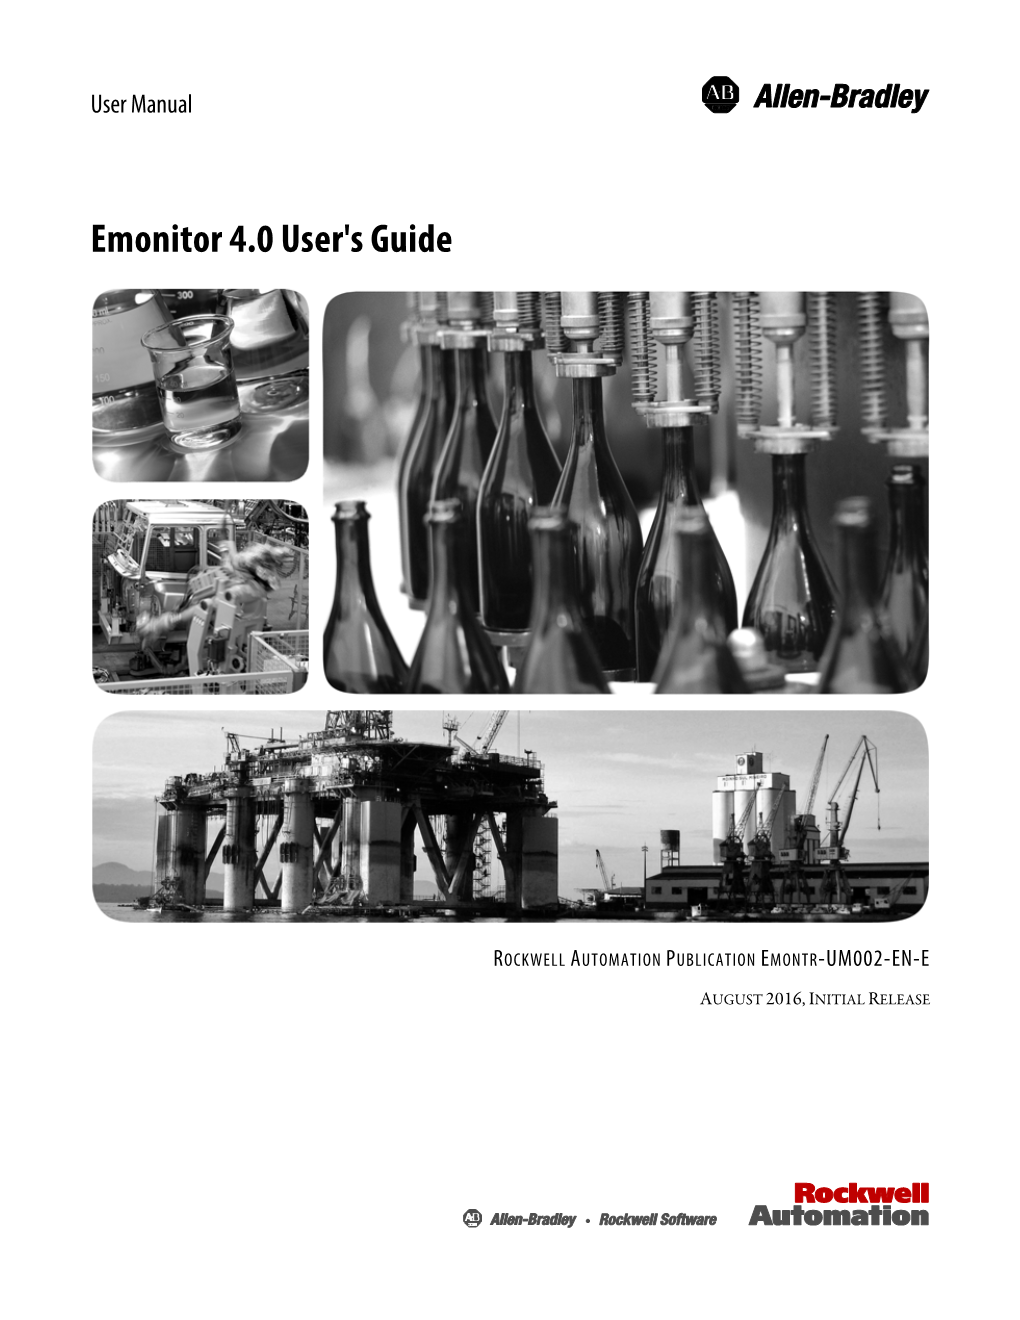 Emonitor 4.0 User's Guide, UM002A-EN-E